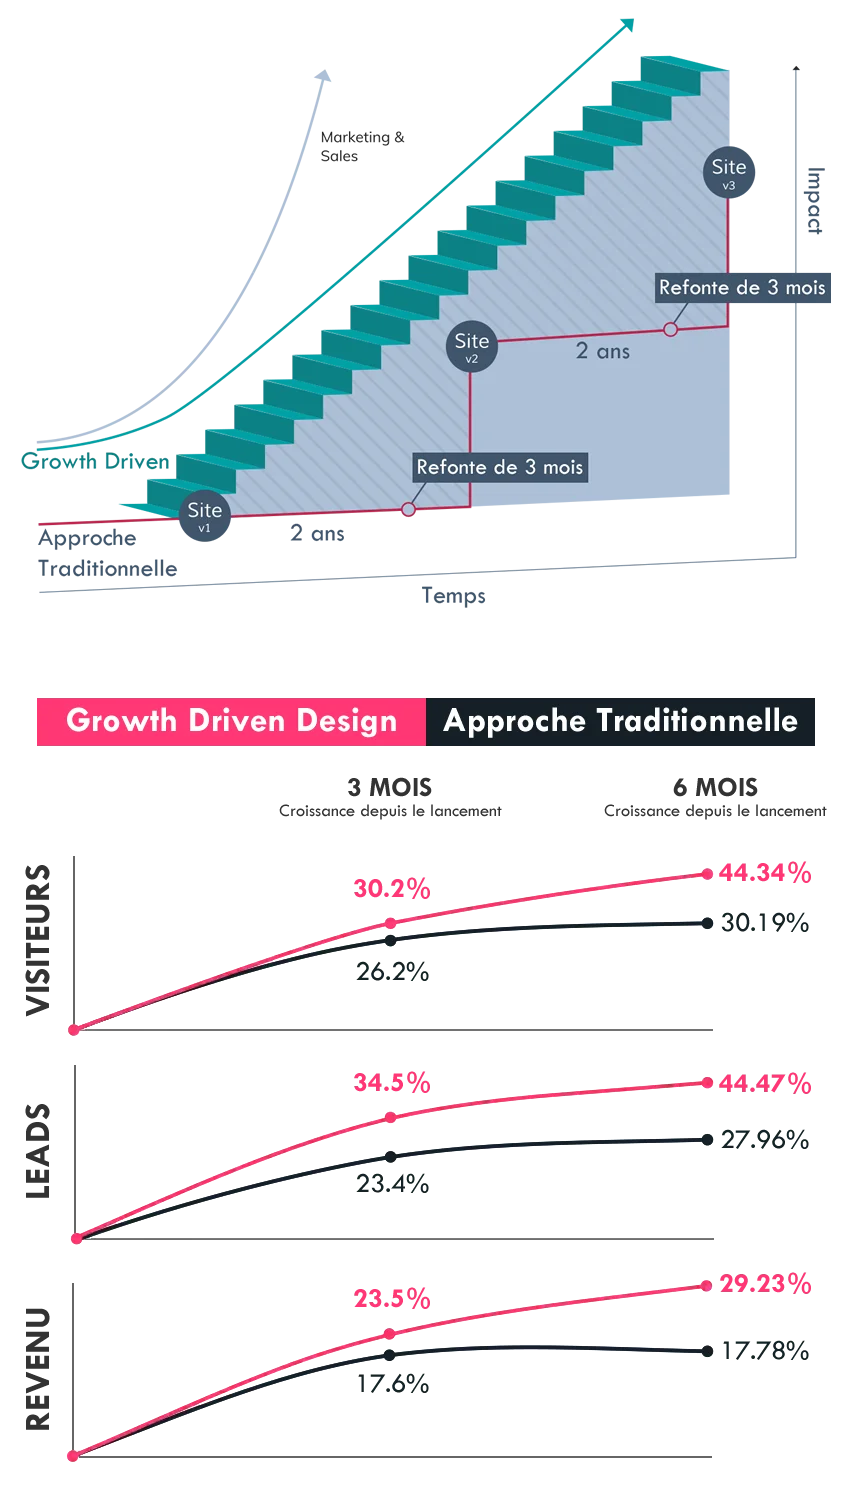 Growth Driven Design VS Approche Traditionnelle